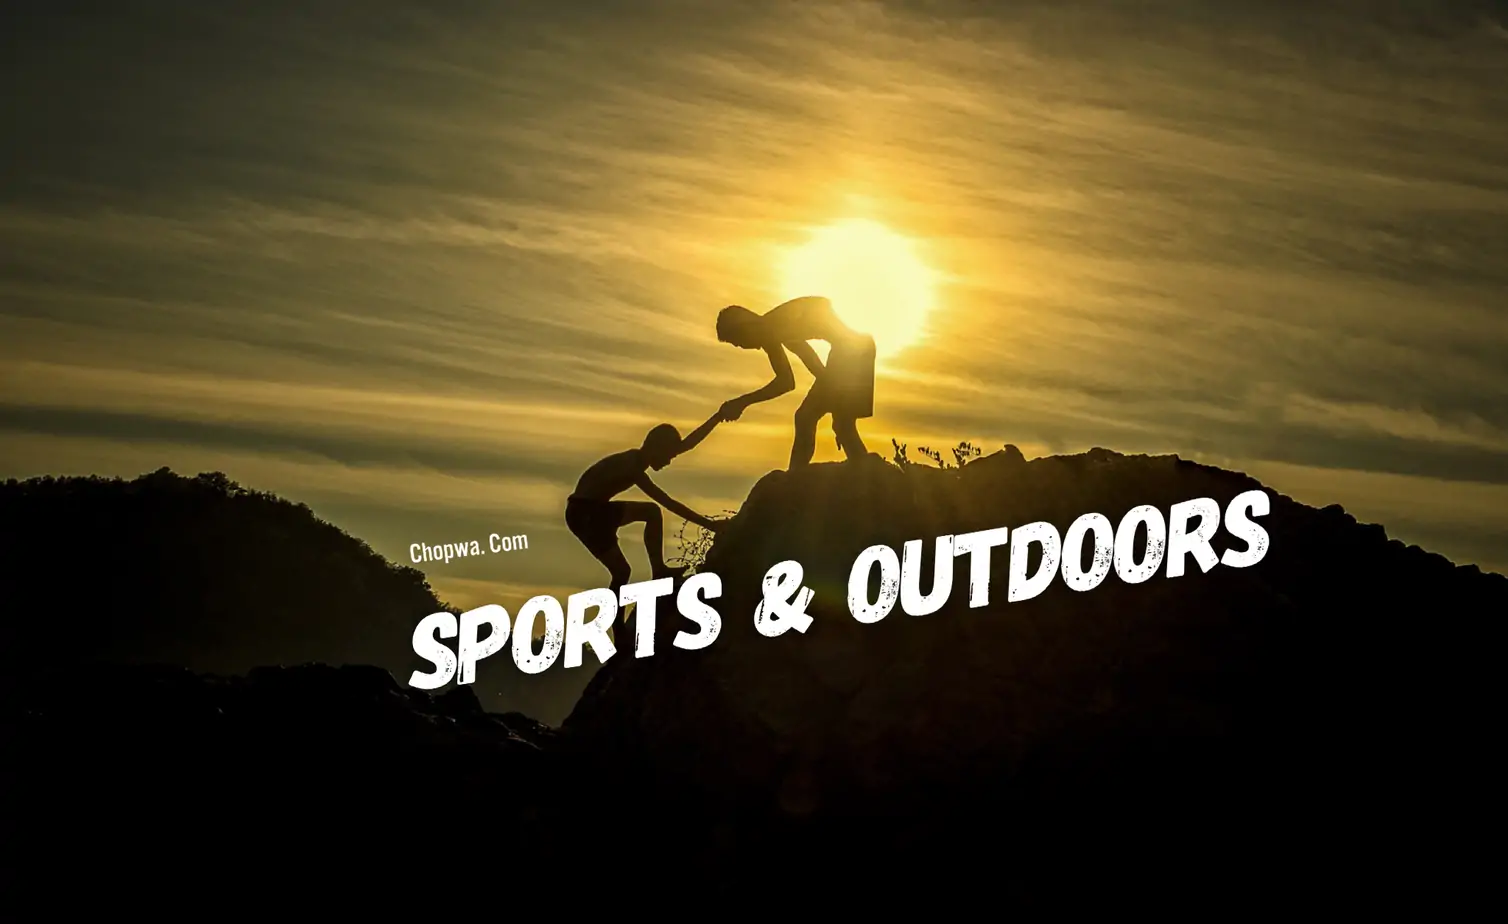 Chopwa- Sports and outdoors